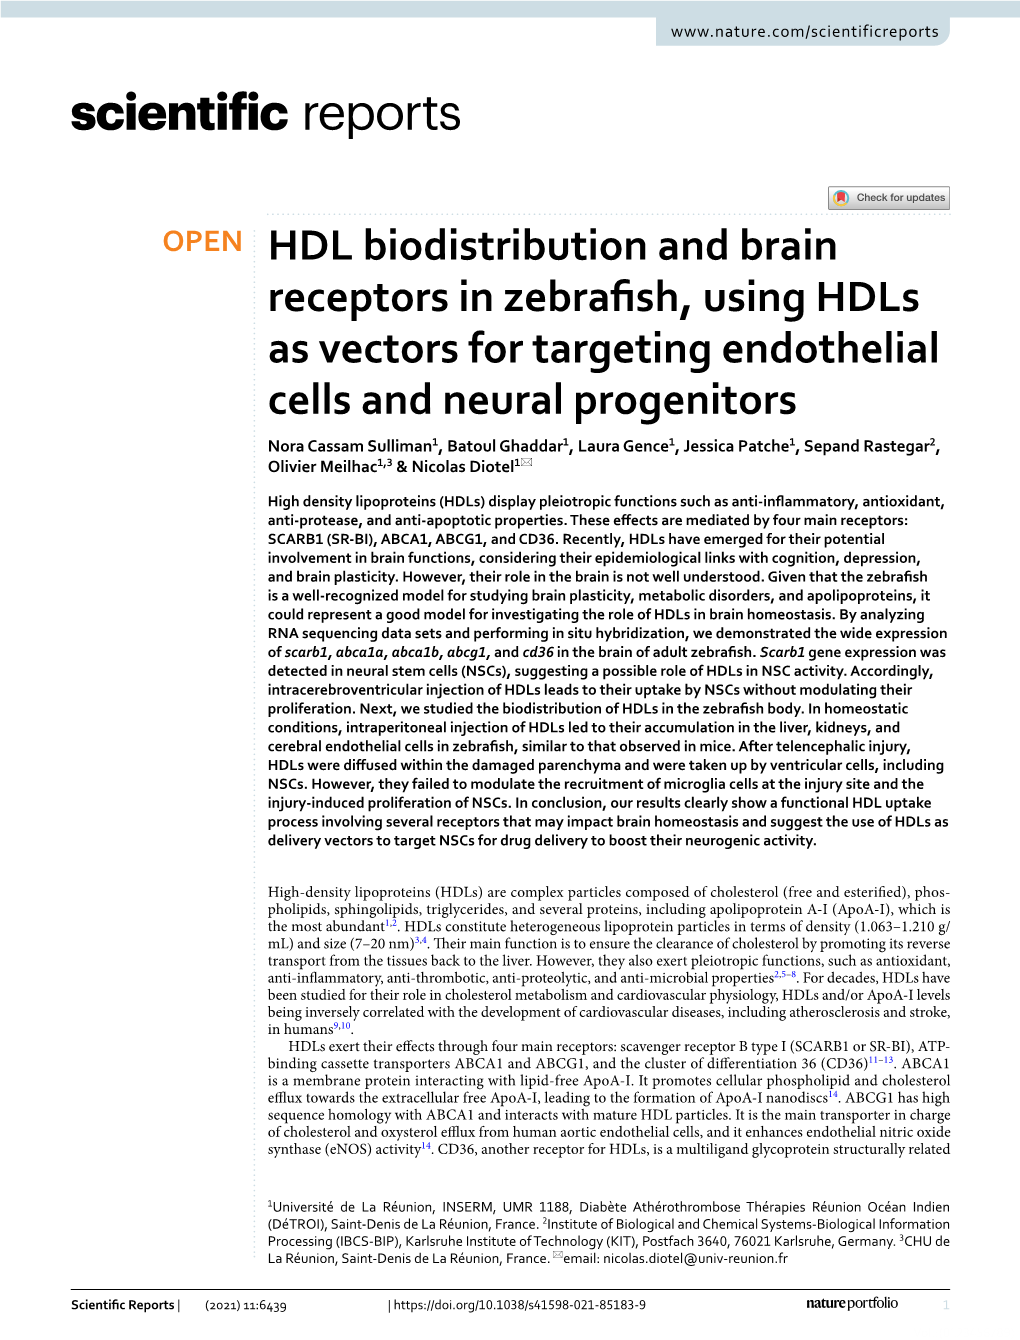 HDL Biodistribution and Brain Receptors in Zebrafish, Using Hdls